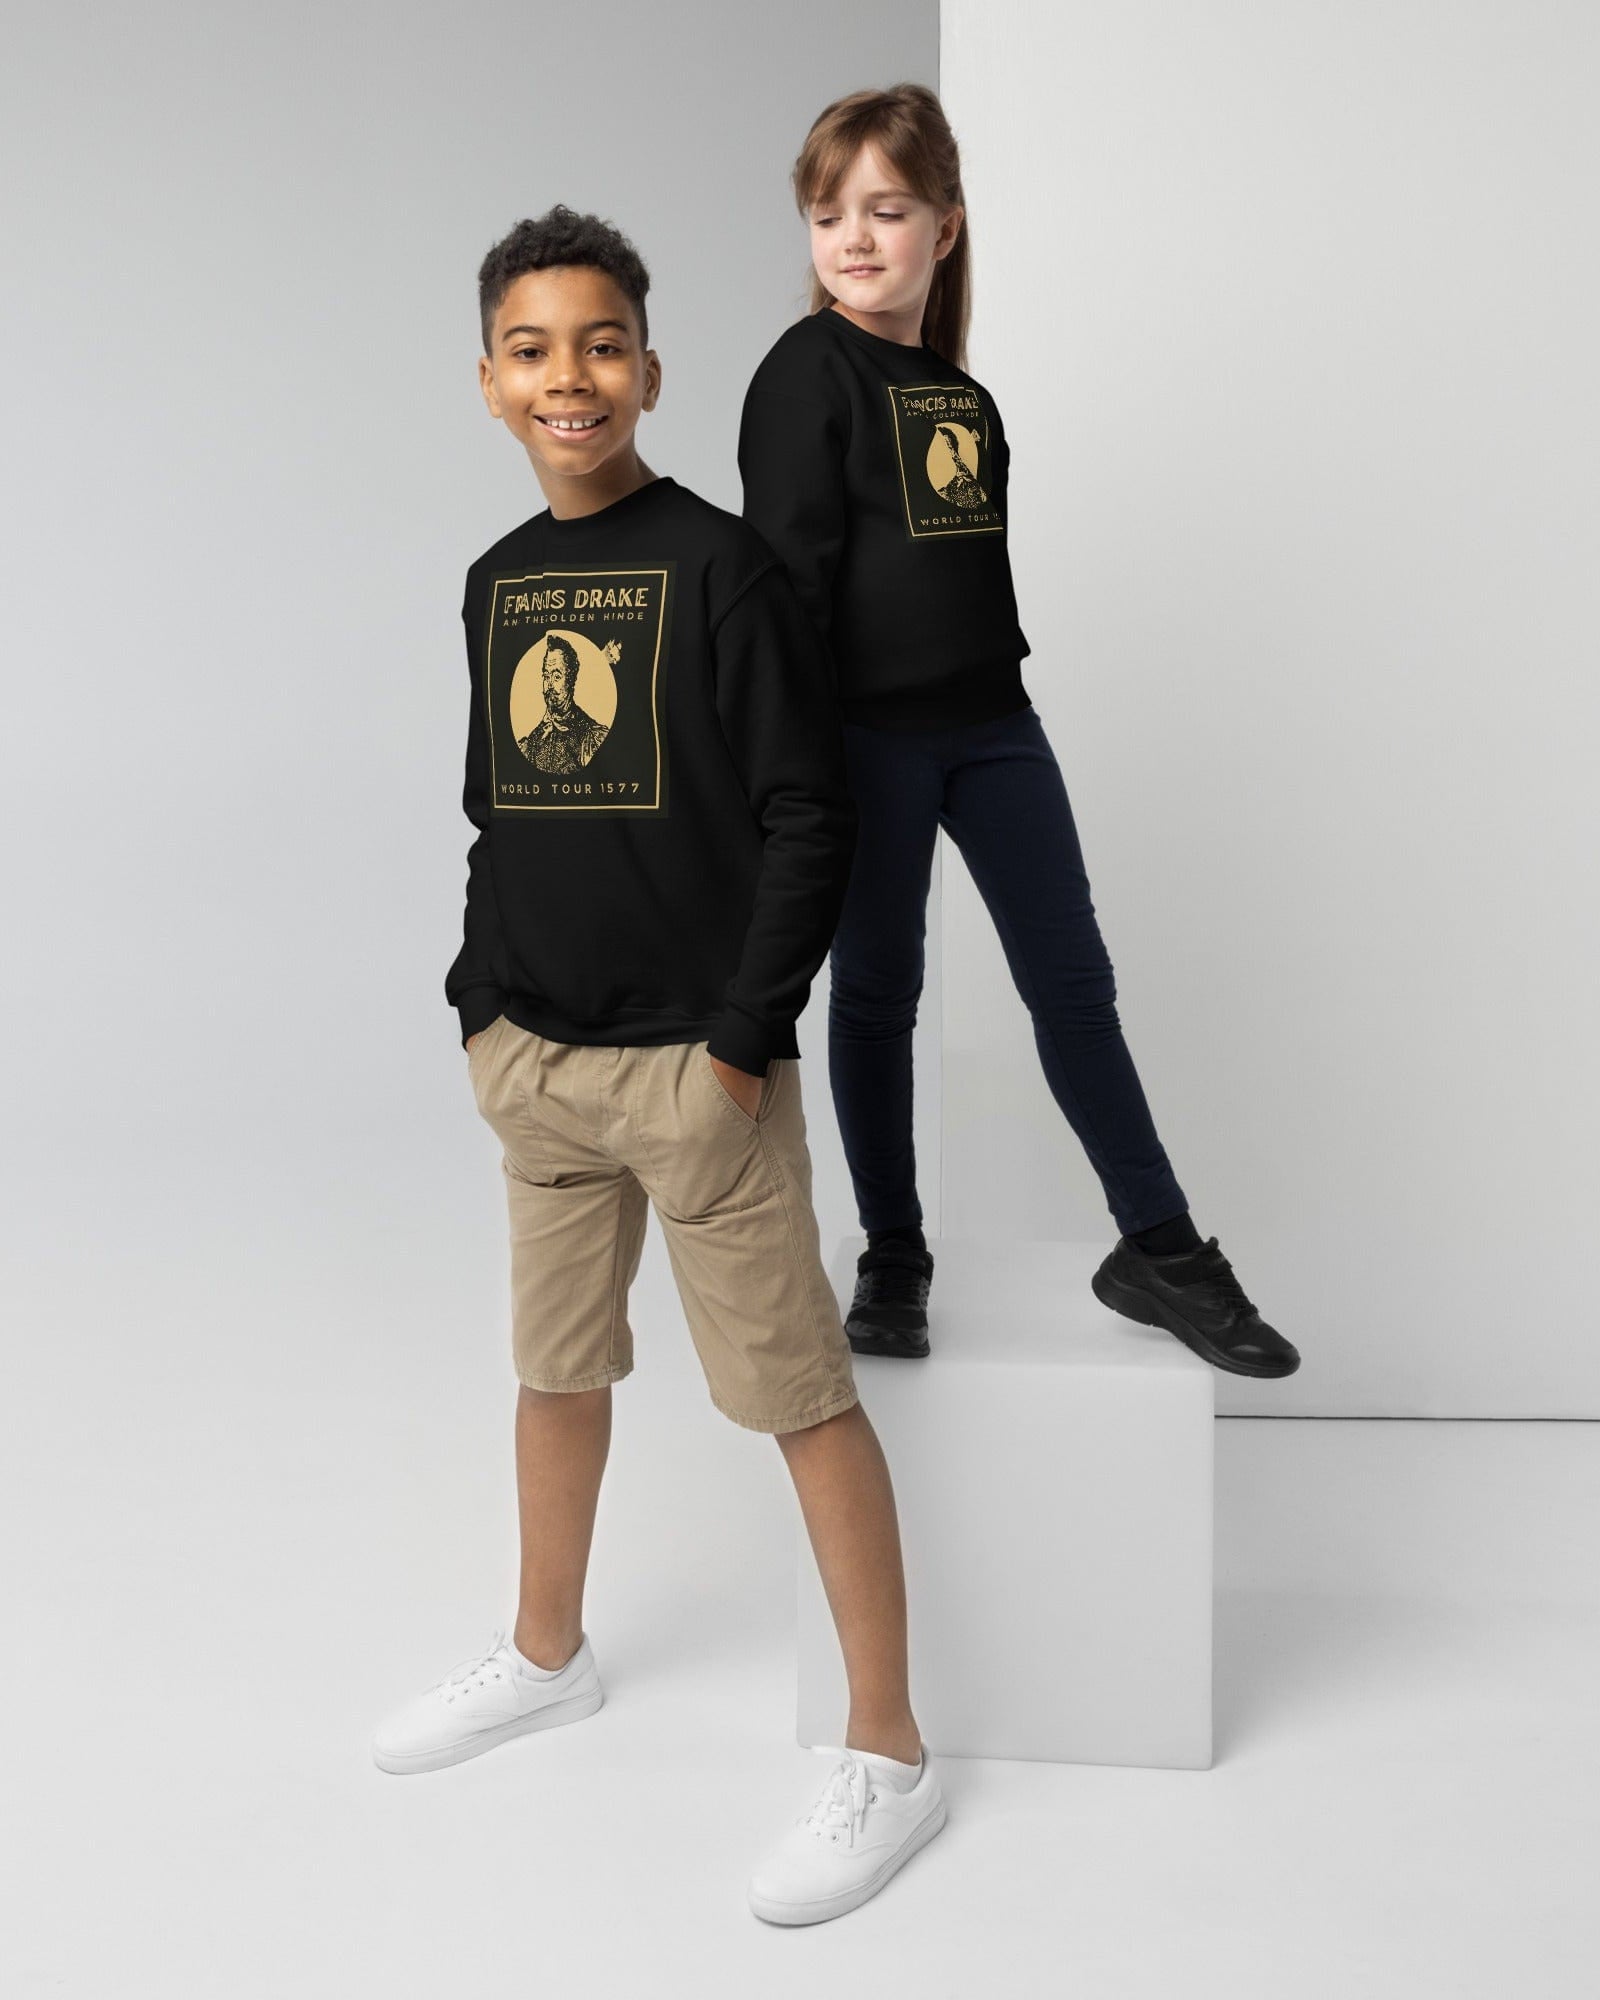 Francis Drake and The Golden Hinde | Youth Sweatshirt youth sweatshirts Jolly & Goode